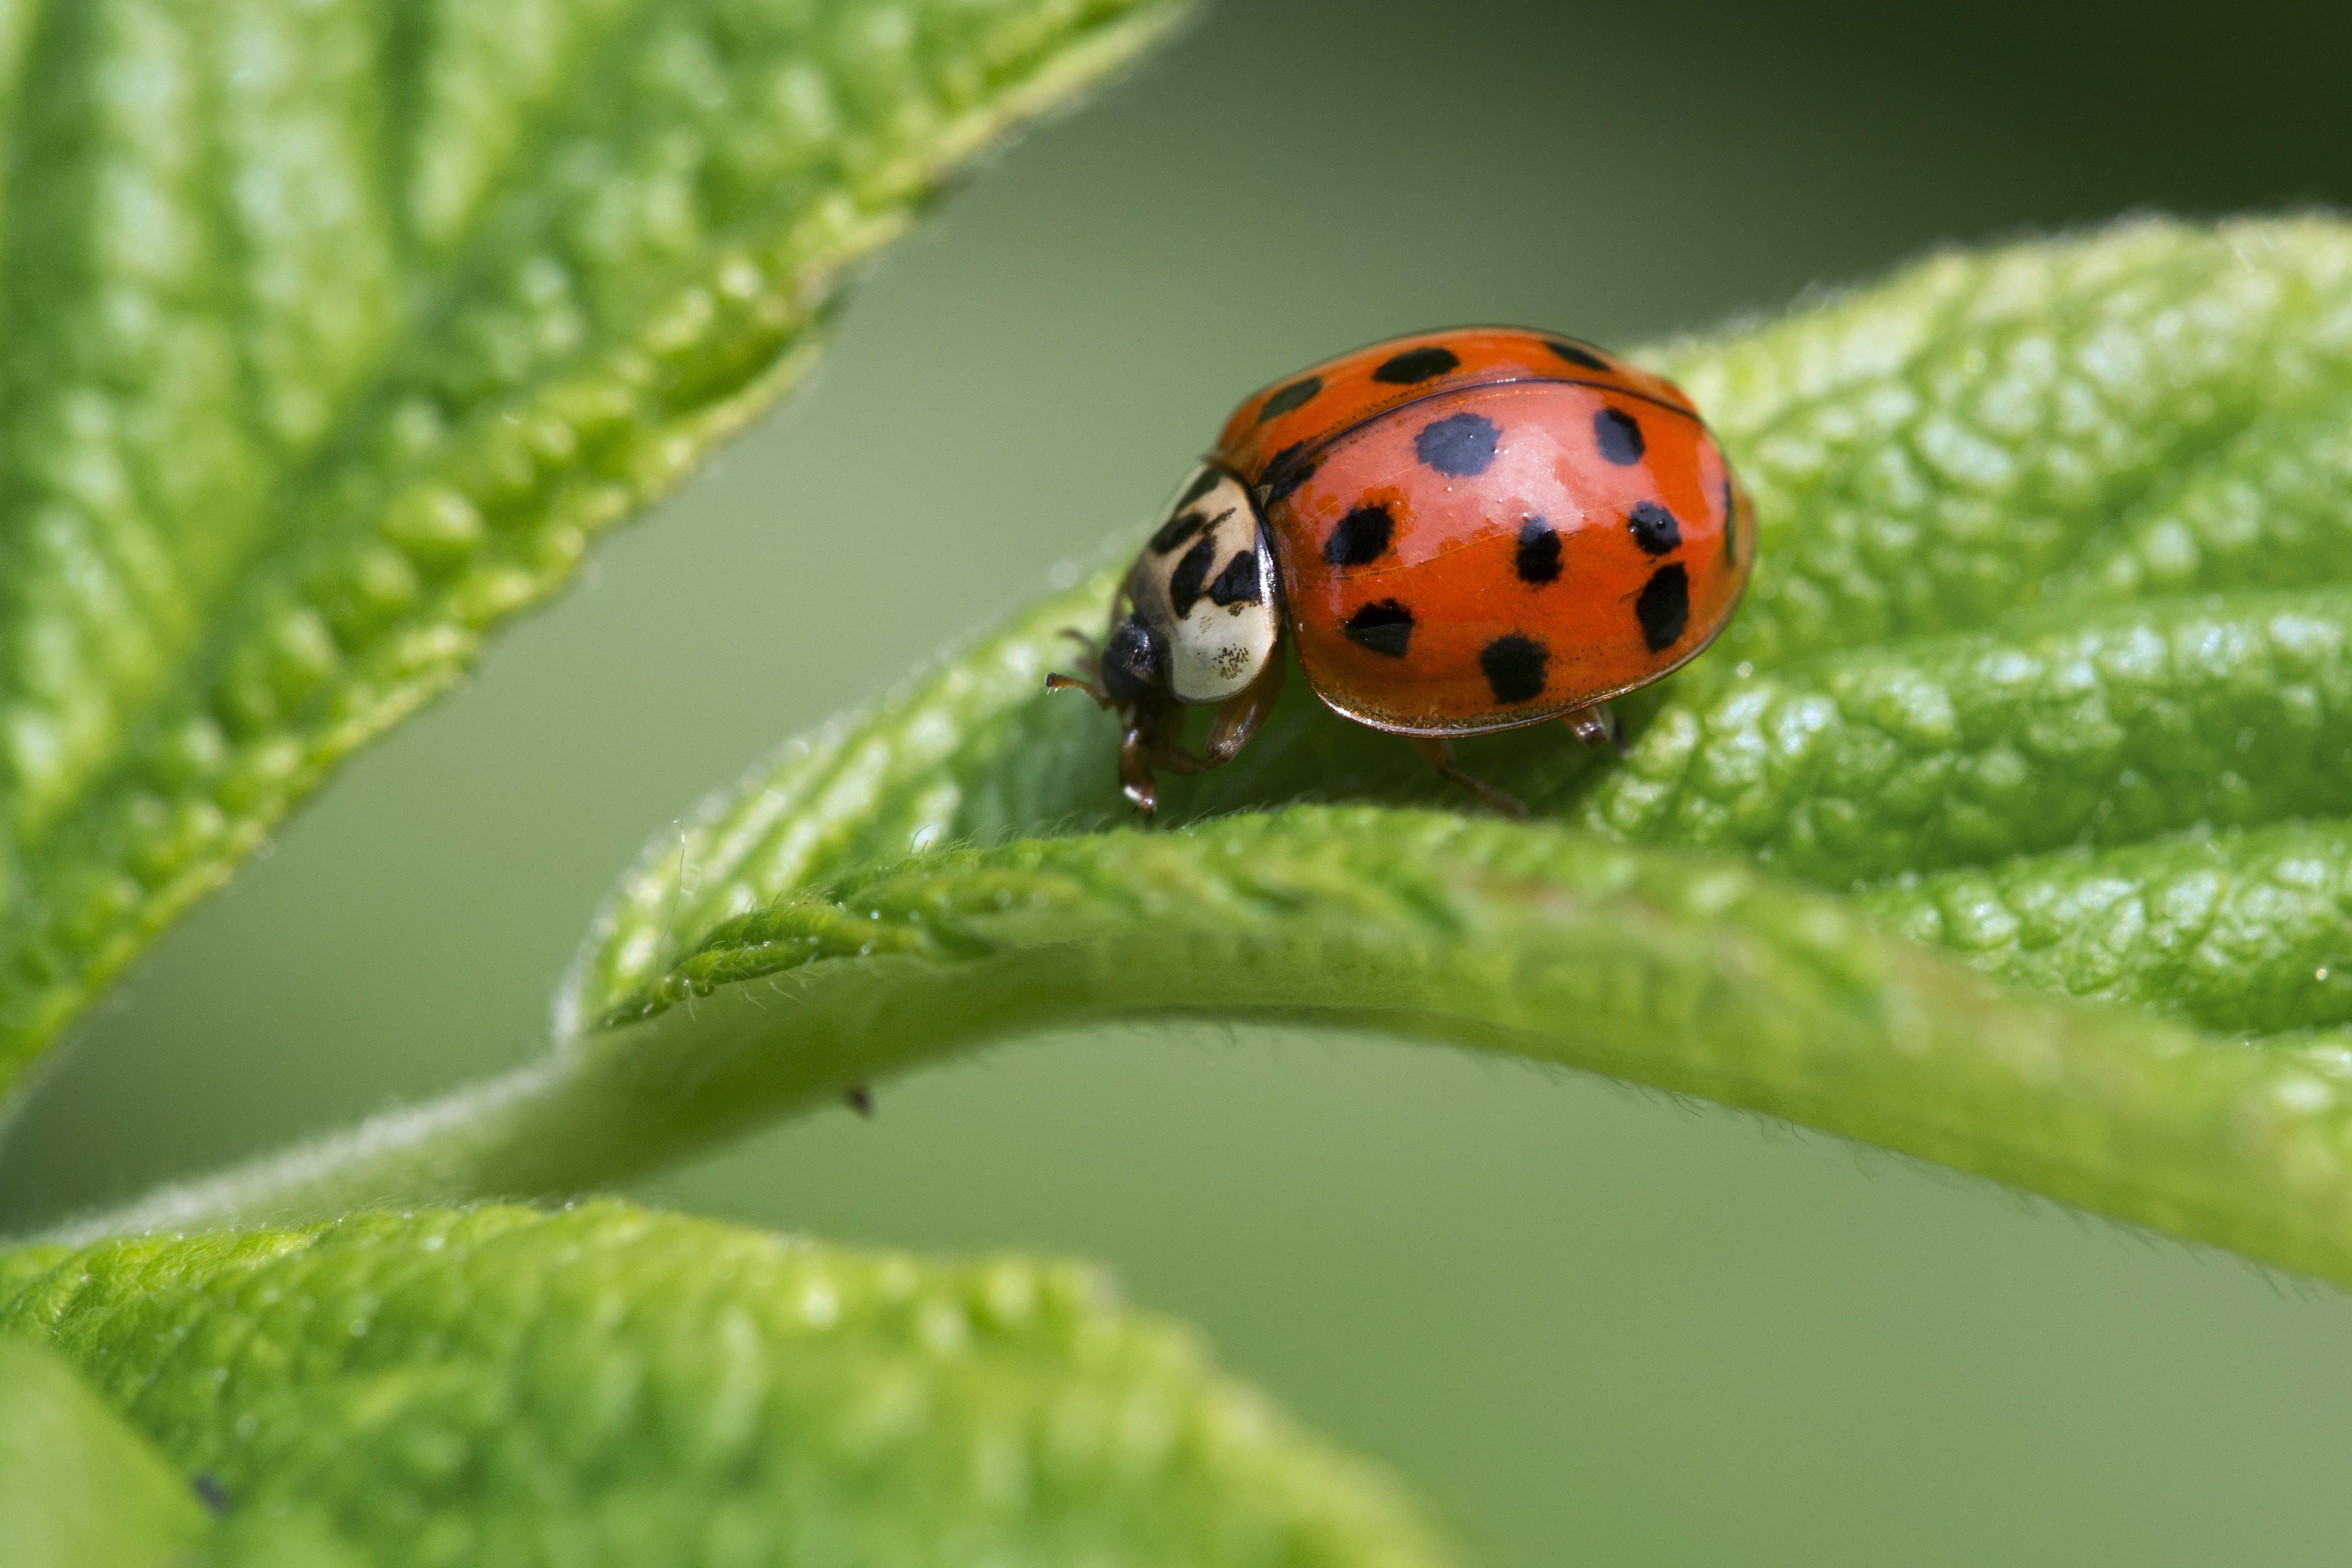 That's no ladybug invading your house